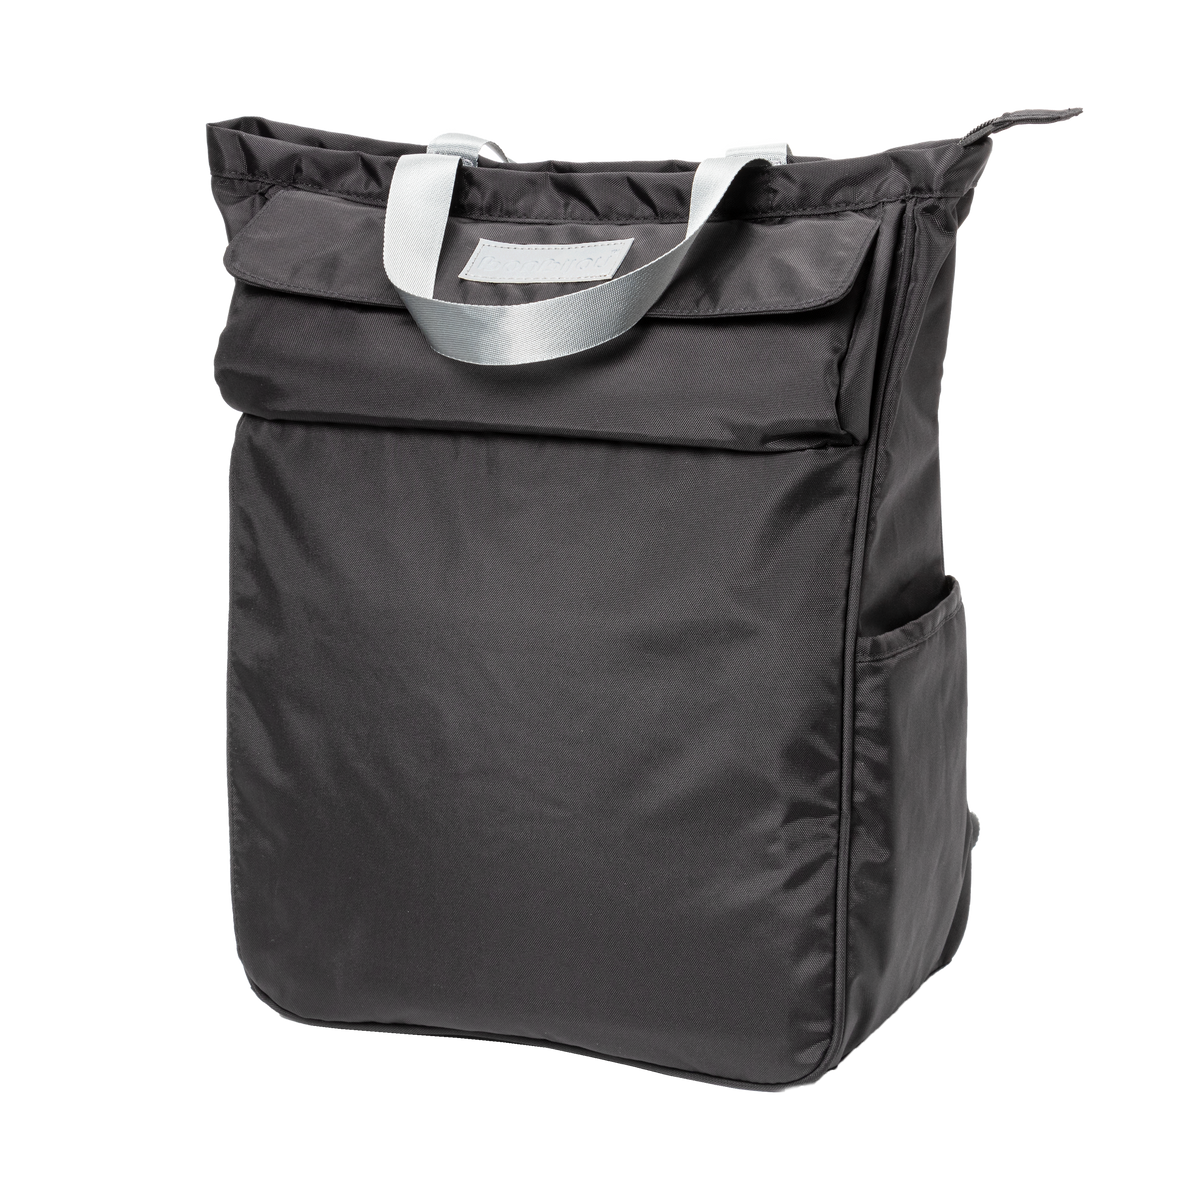 Bonbijou Diaper Bag Backpack (The Everyday Pack)